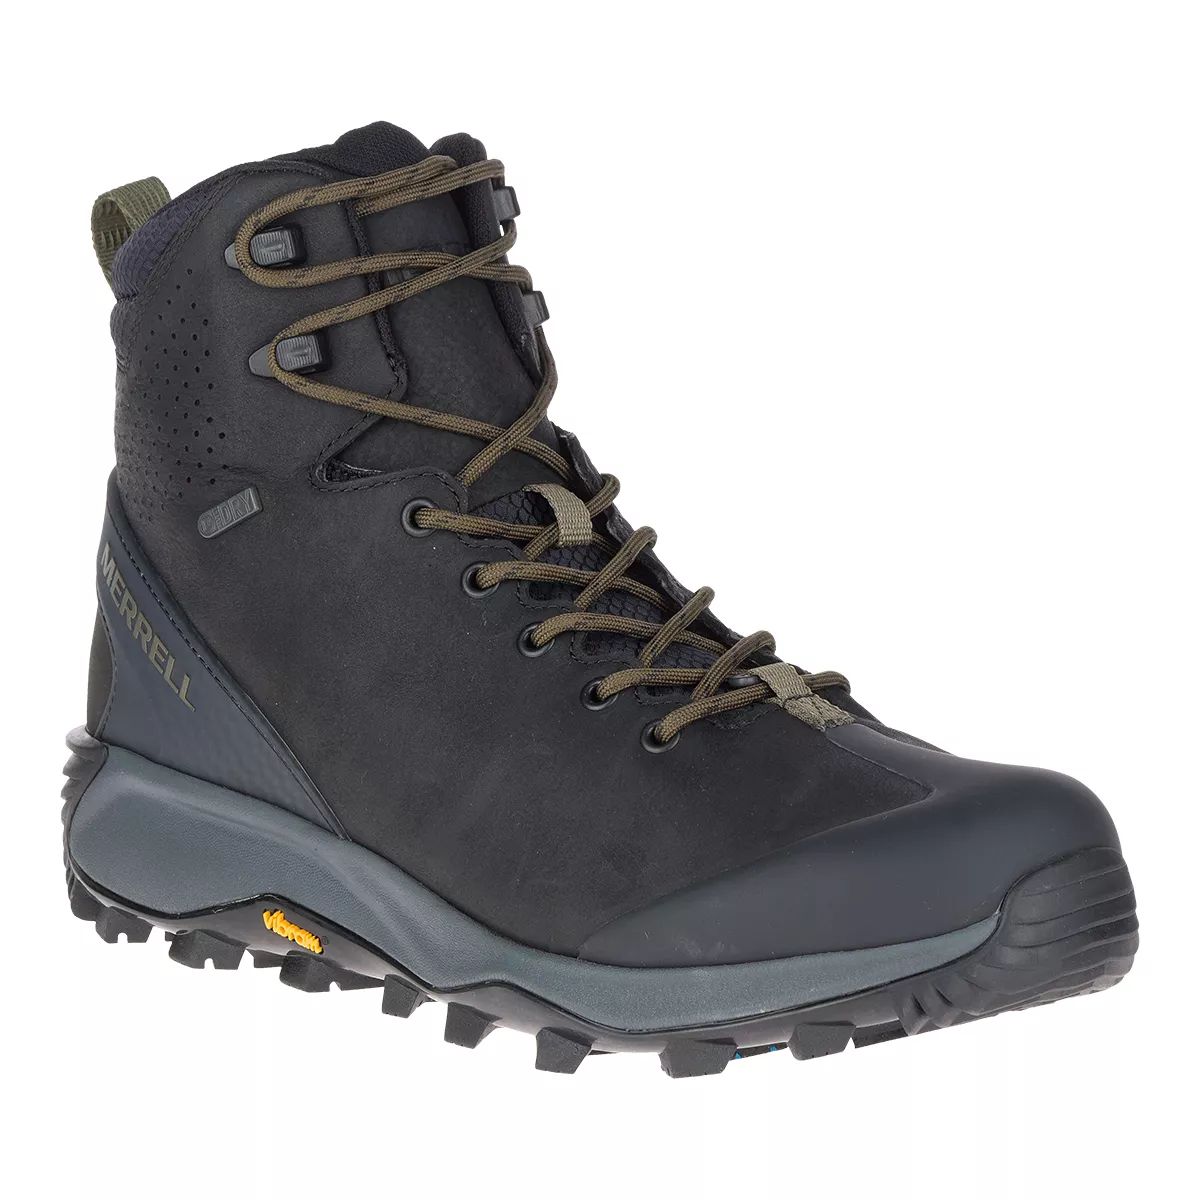 Merrell Men's Thermo Glacier Winter Boots, Mid Top, Waterproof